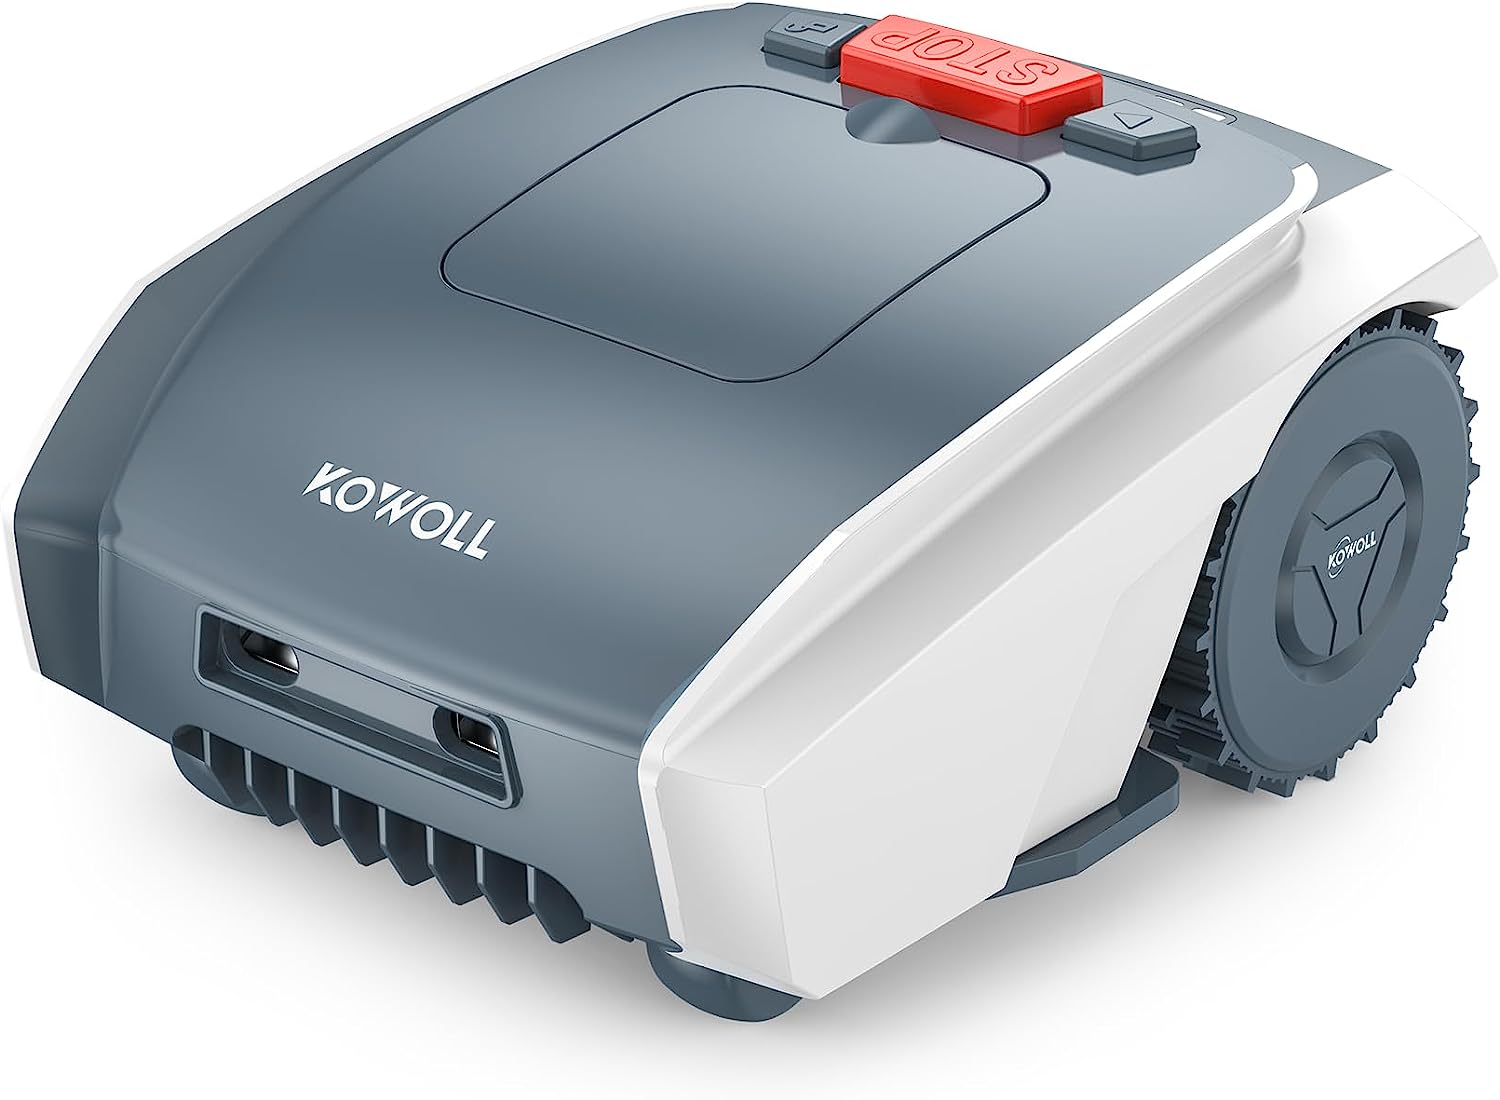 KOWOLL Robot Lawn Mower